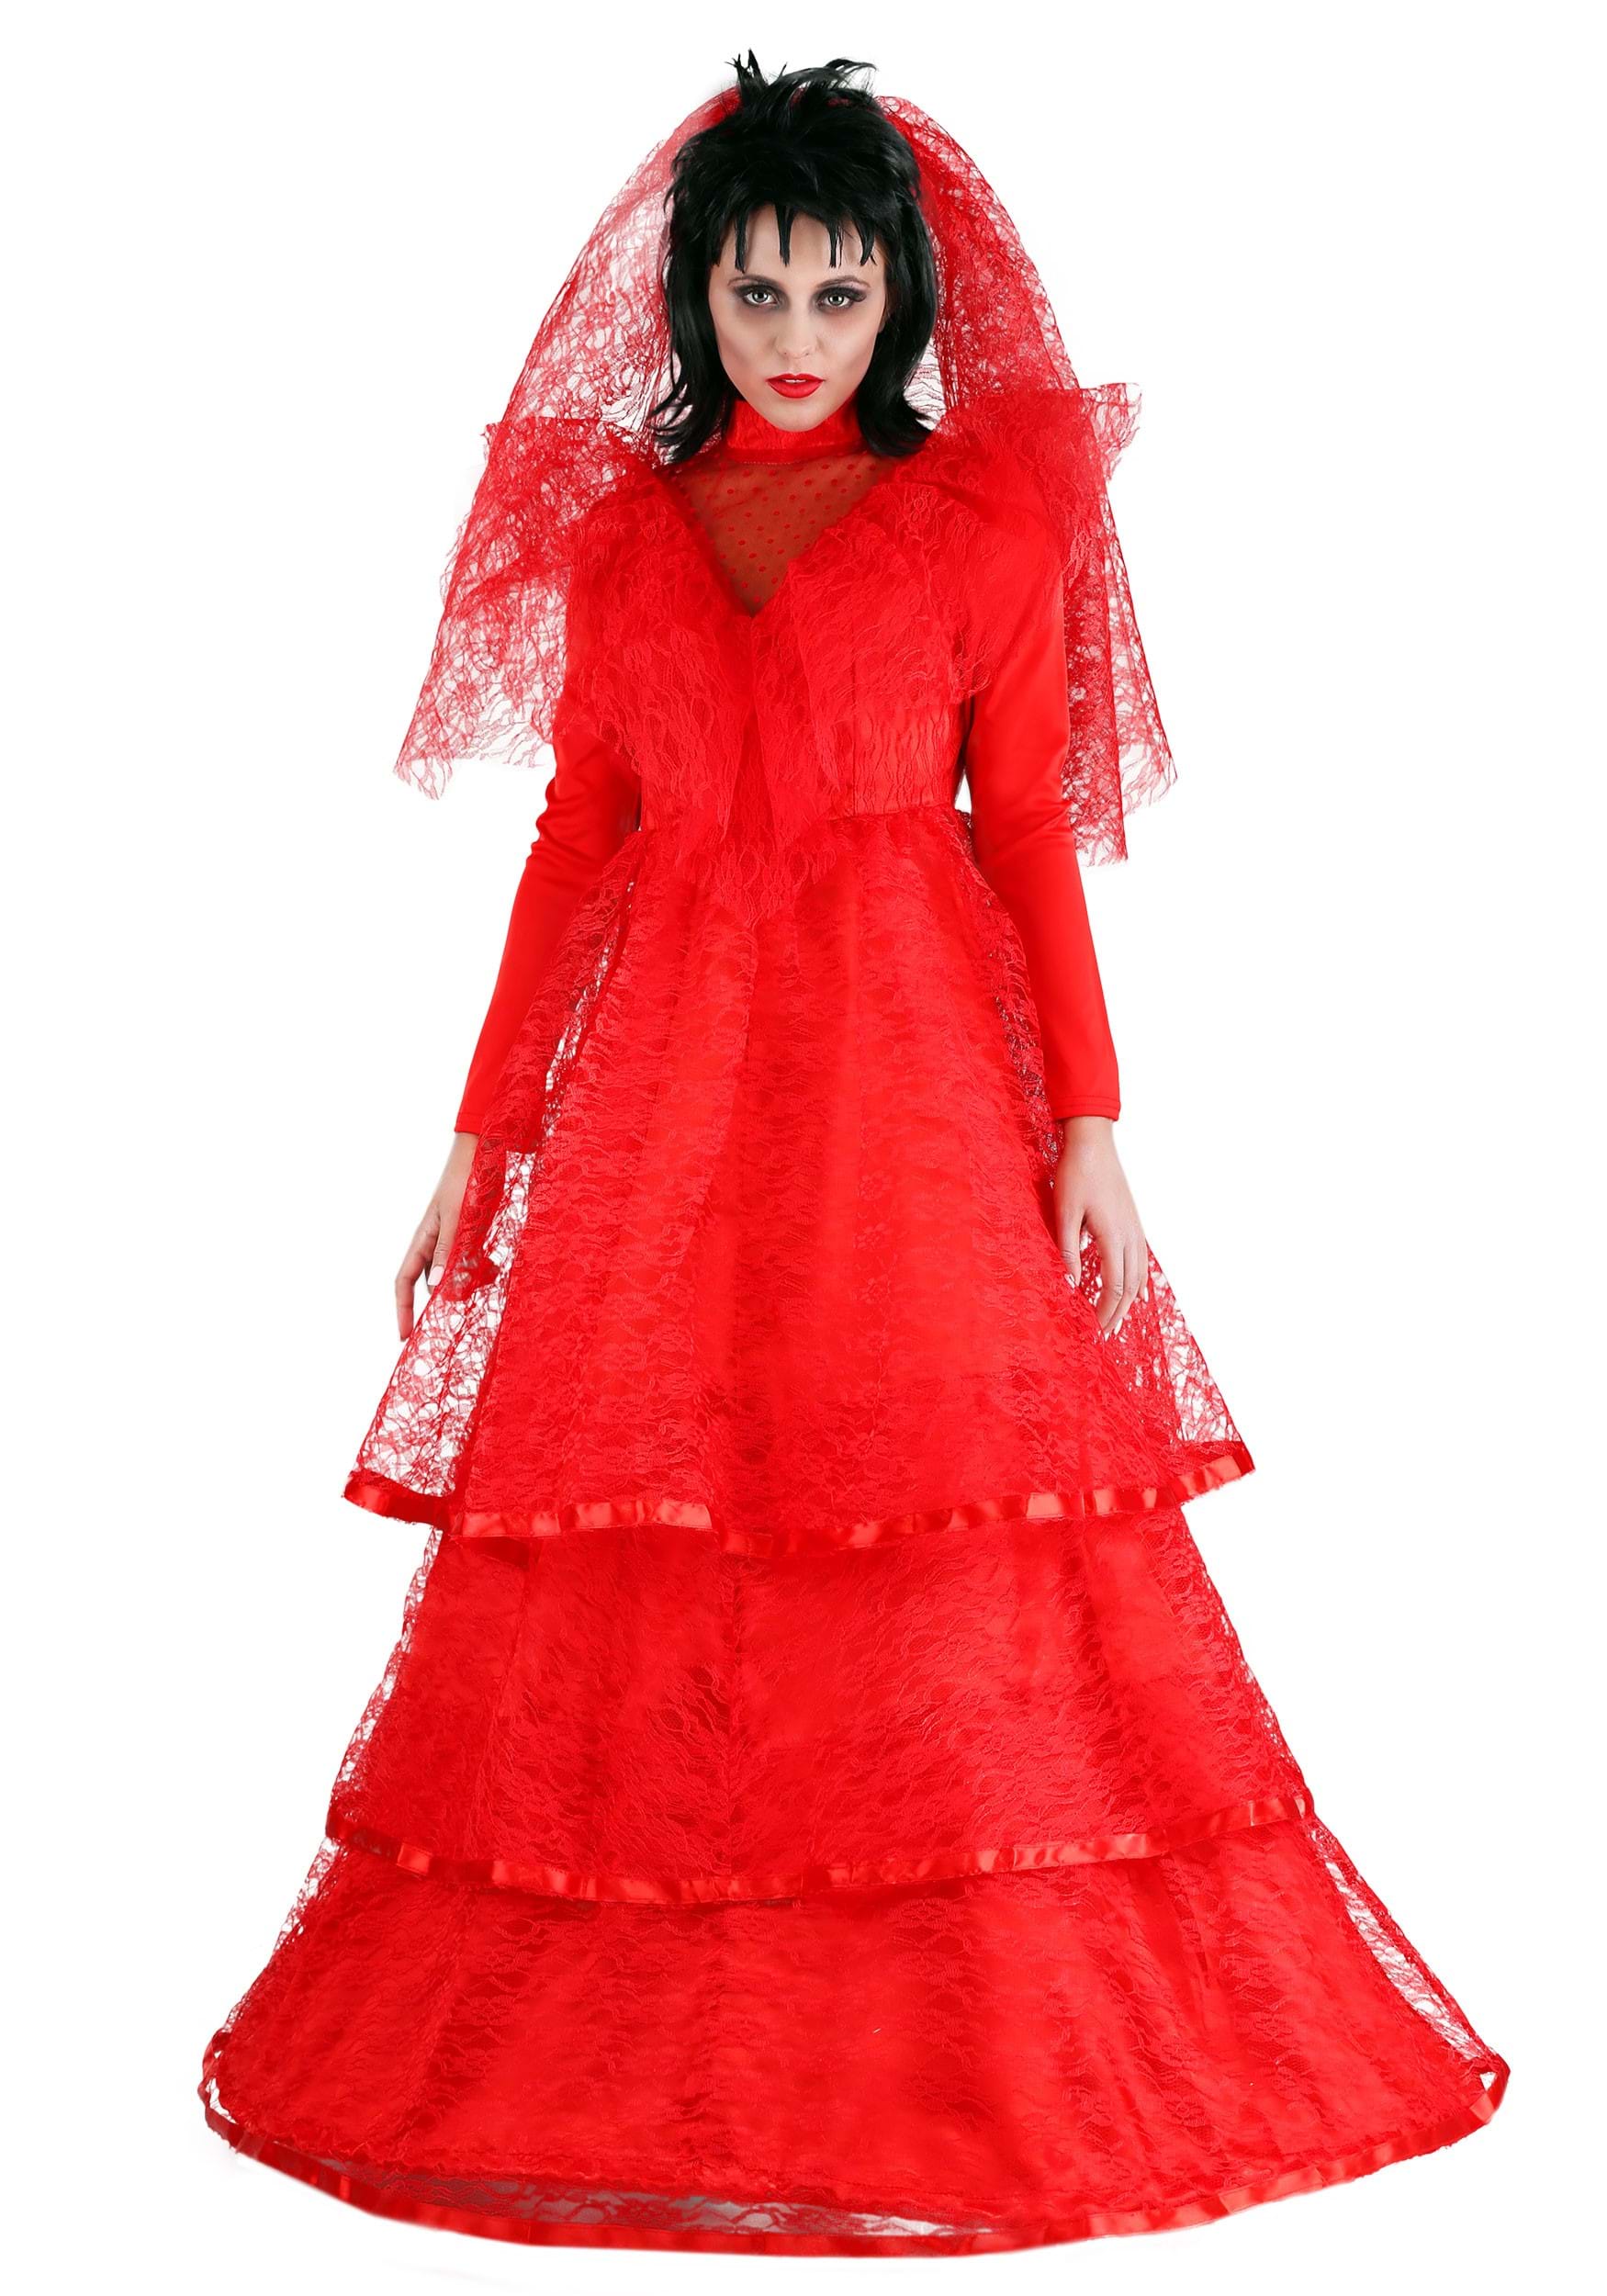 Lydia Deetz Red Wedding Dress Beetlejuice Wedding OFF